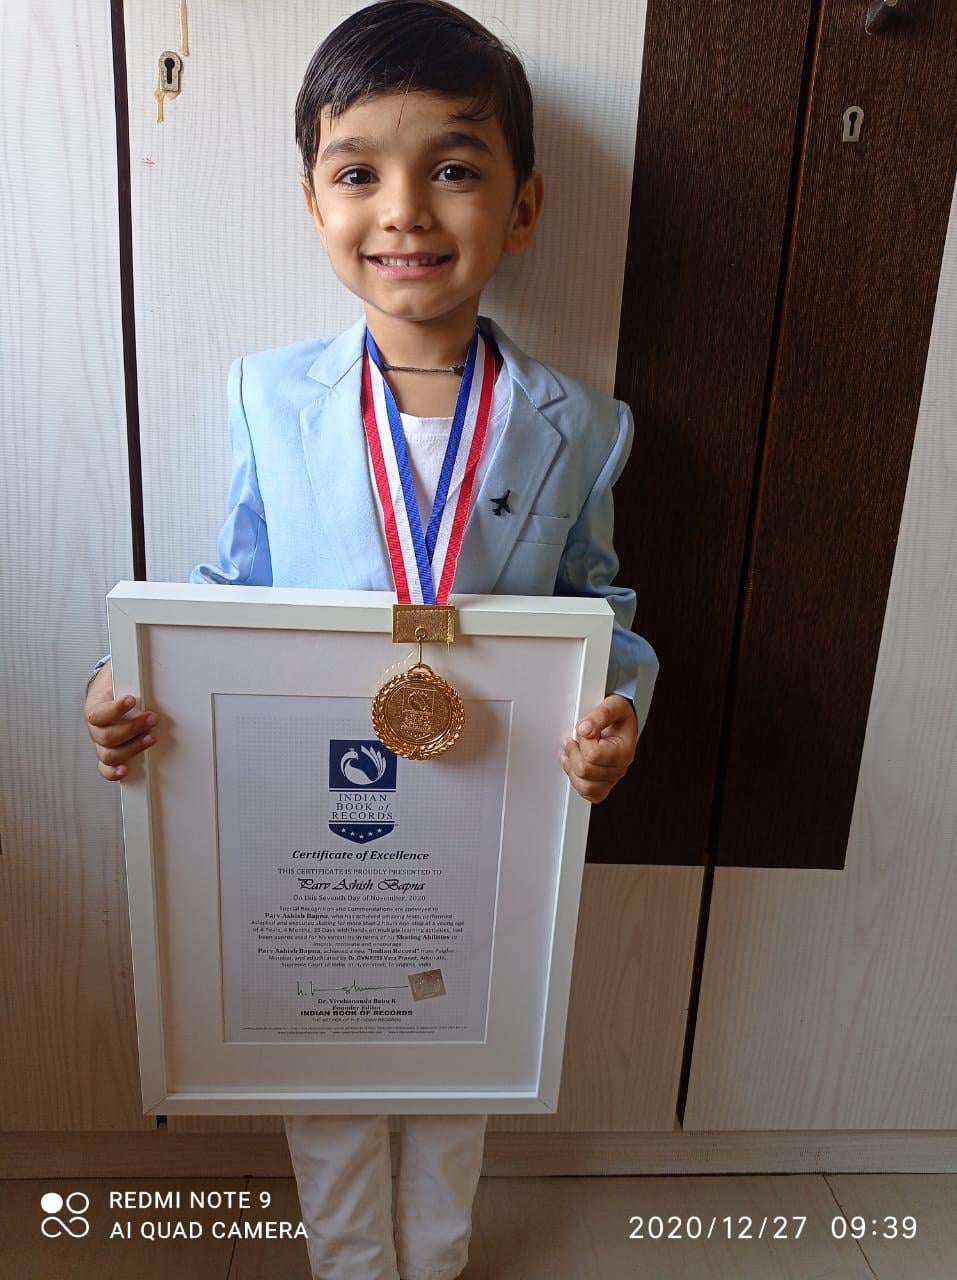 Ashish Bapna - Certificate of Excellence